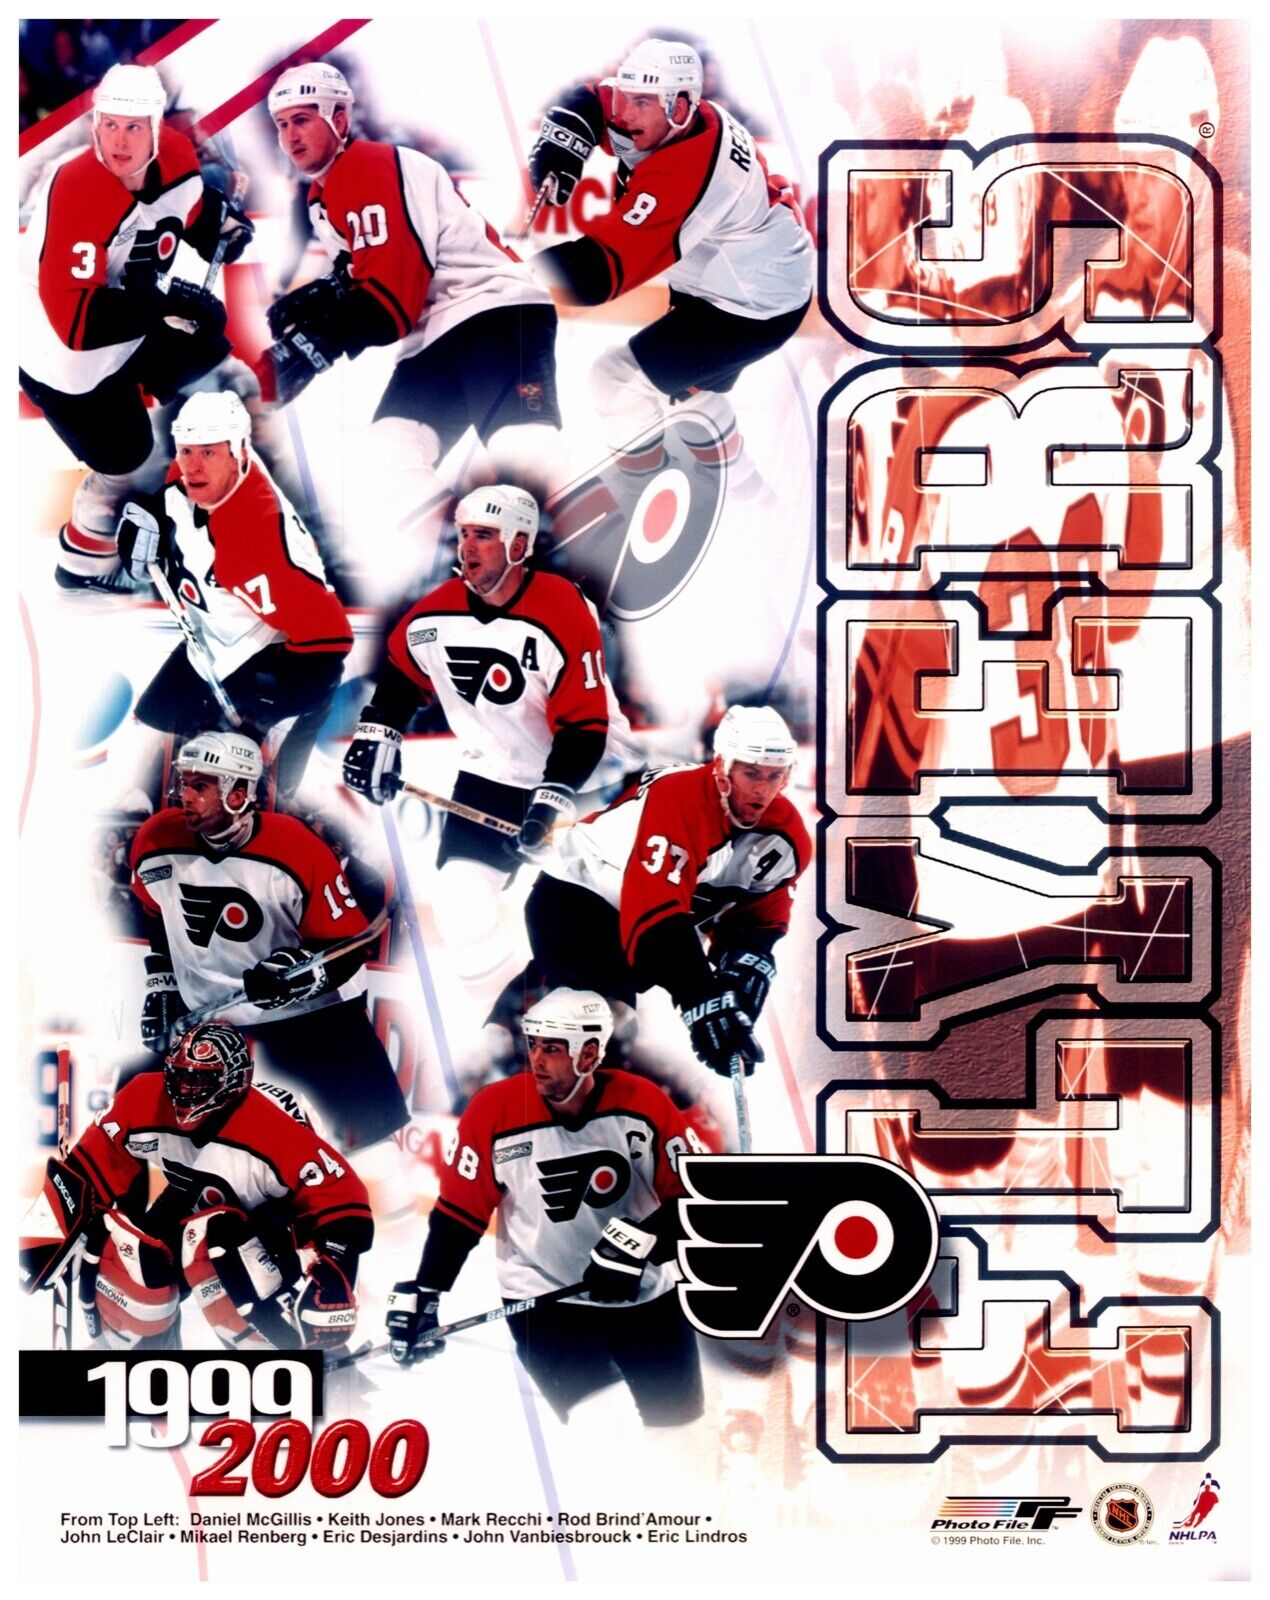 1999 / 2000 Philadelphia Flyers Unsigned Photofile 8x10 Team Composite Photo